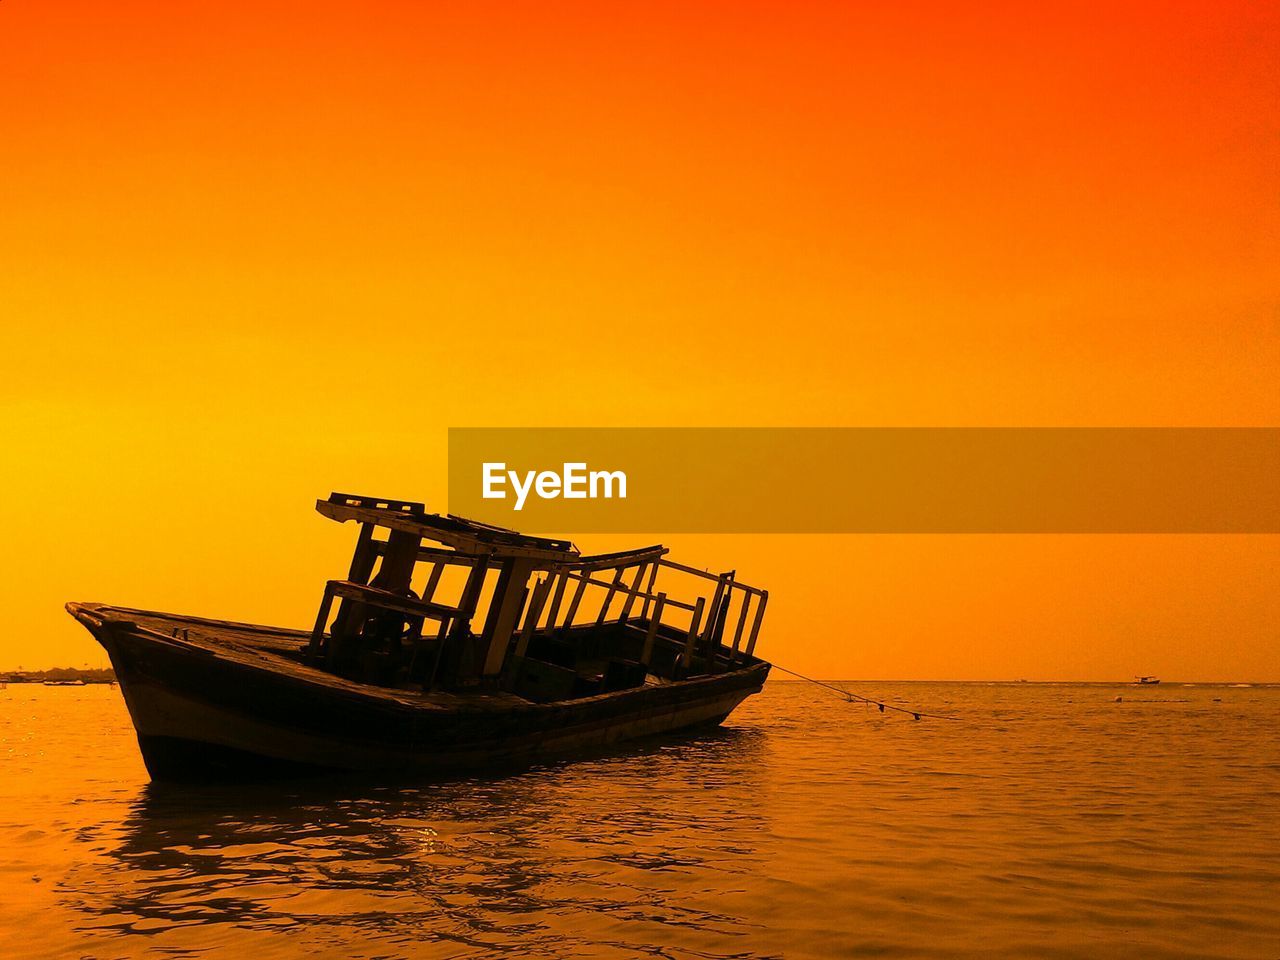 Boat moored on sea against orange sky at sunset